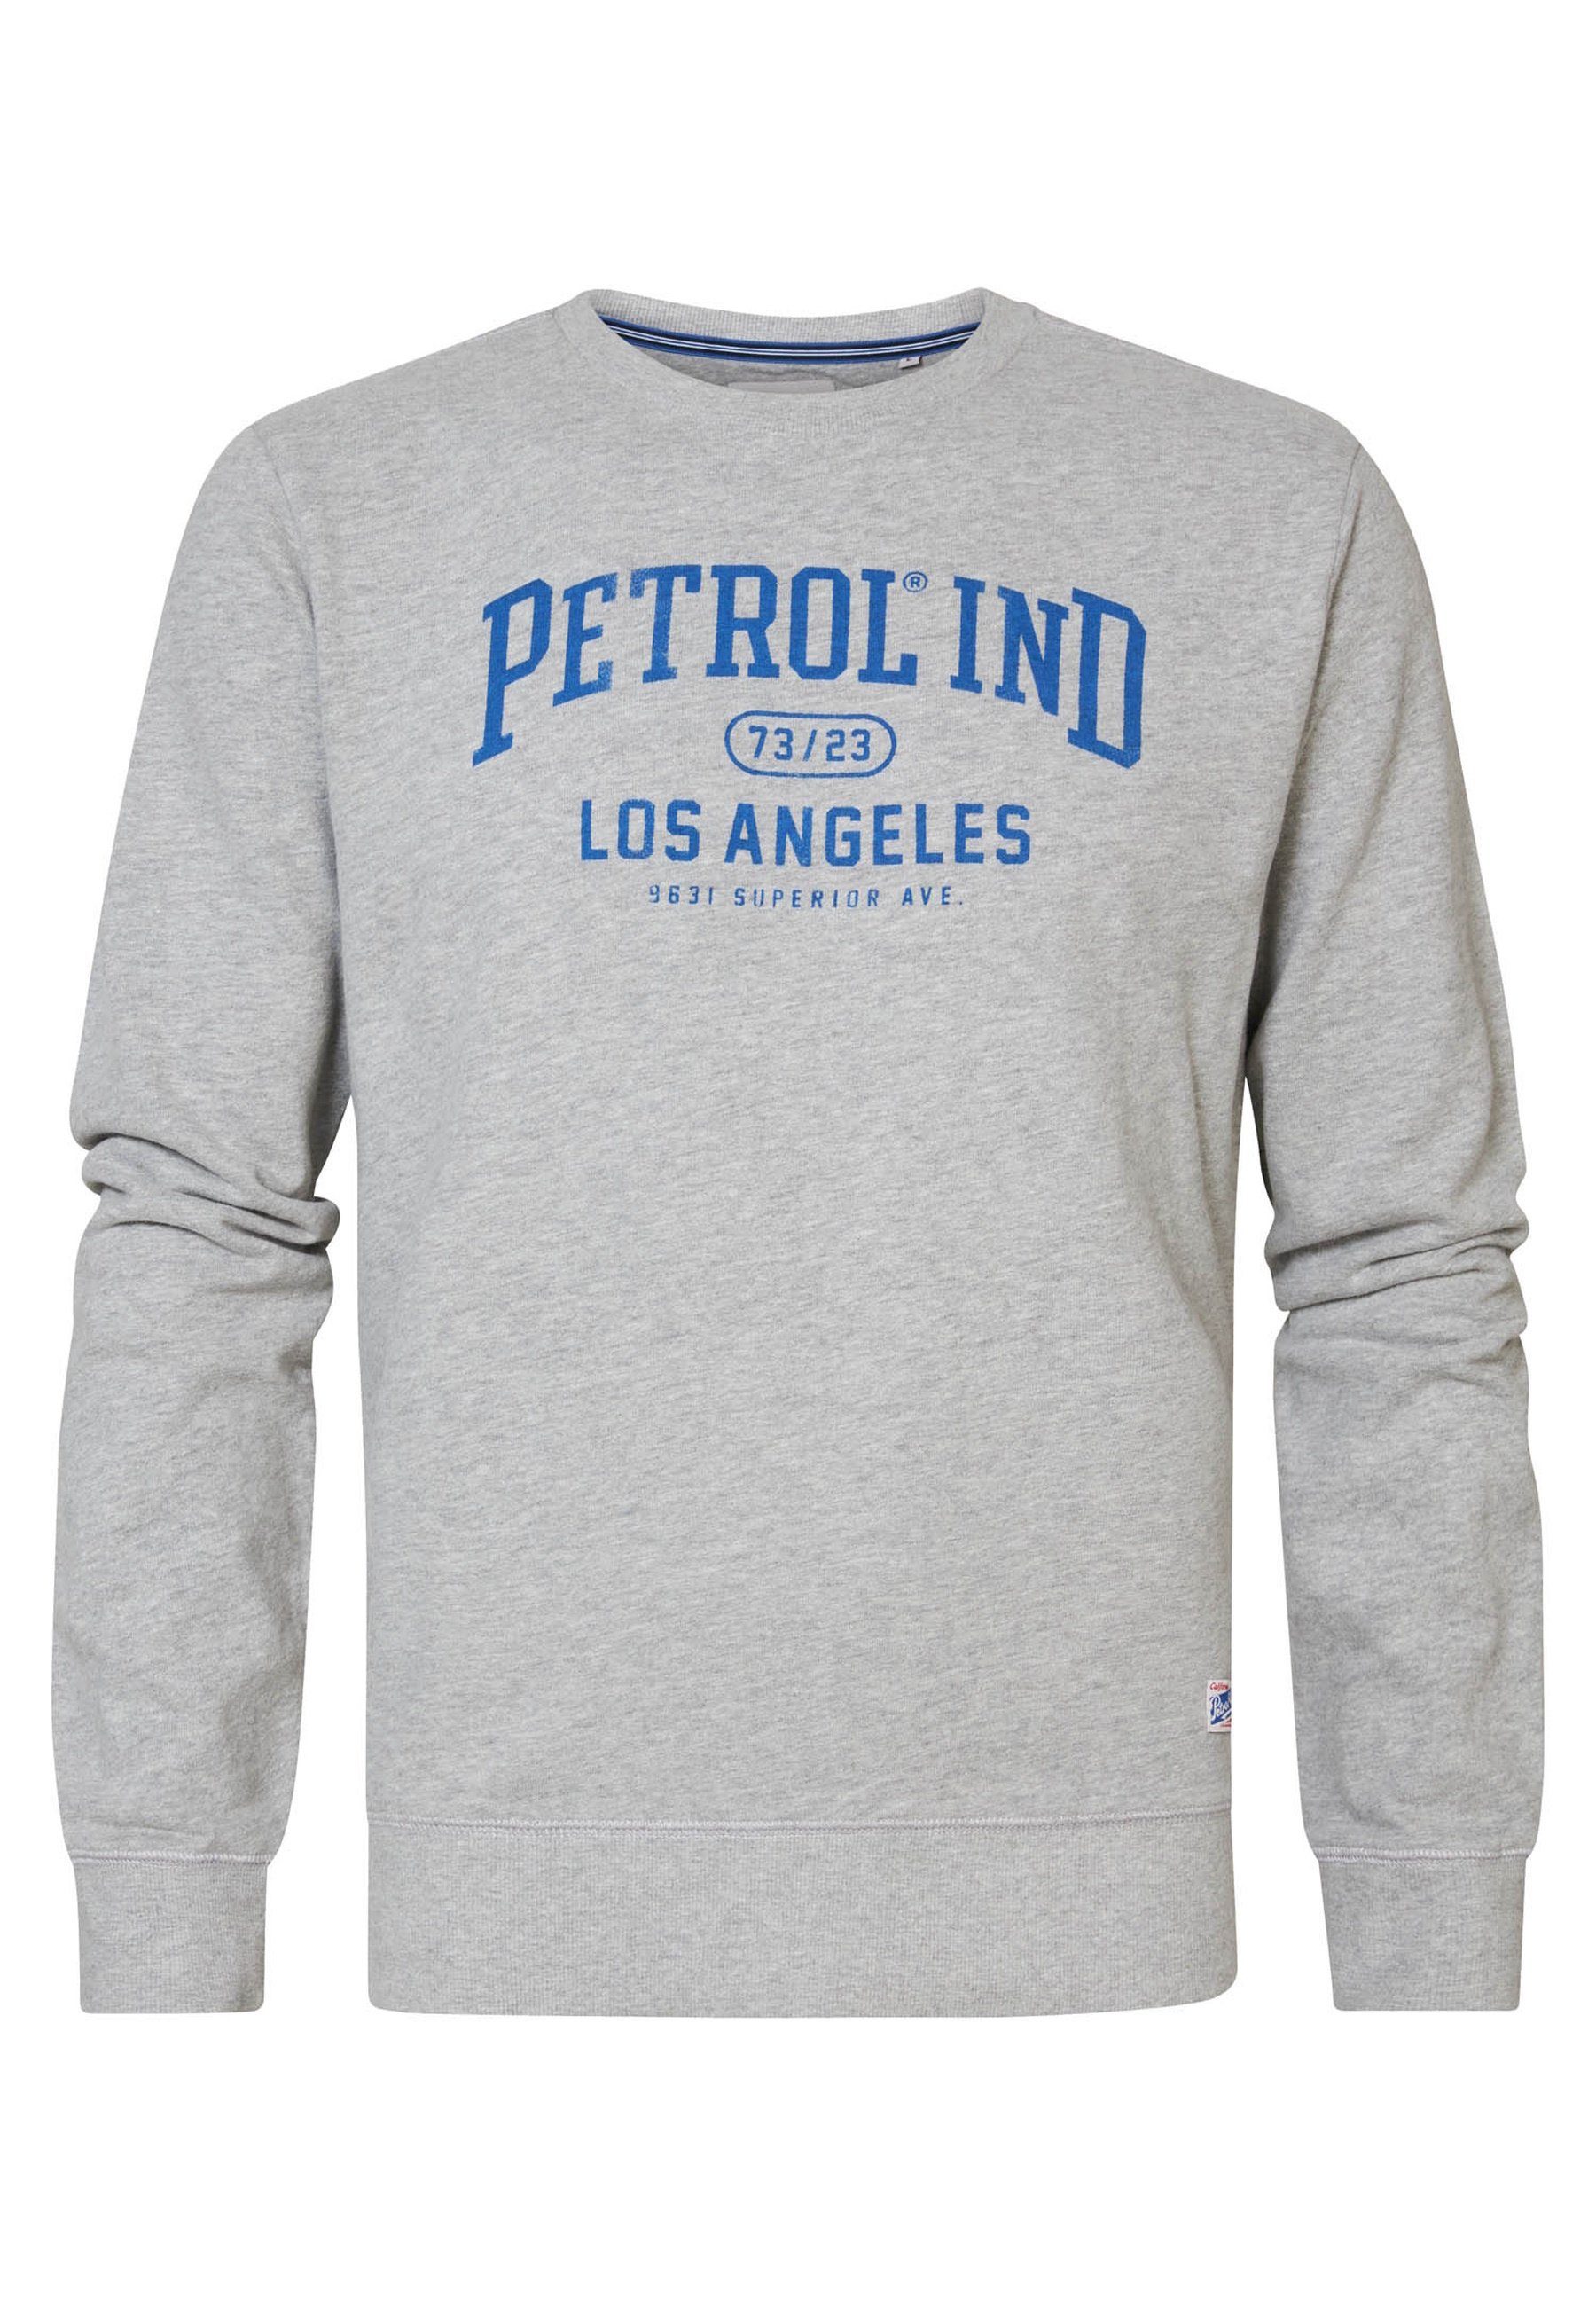 Petrol Industries Sweatshirt Pullover Sweatshirt Round Neck